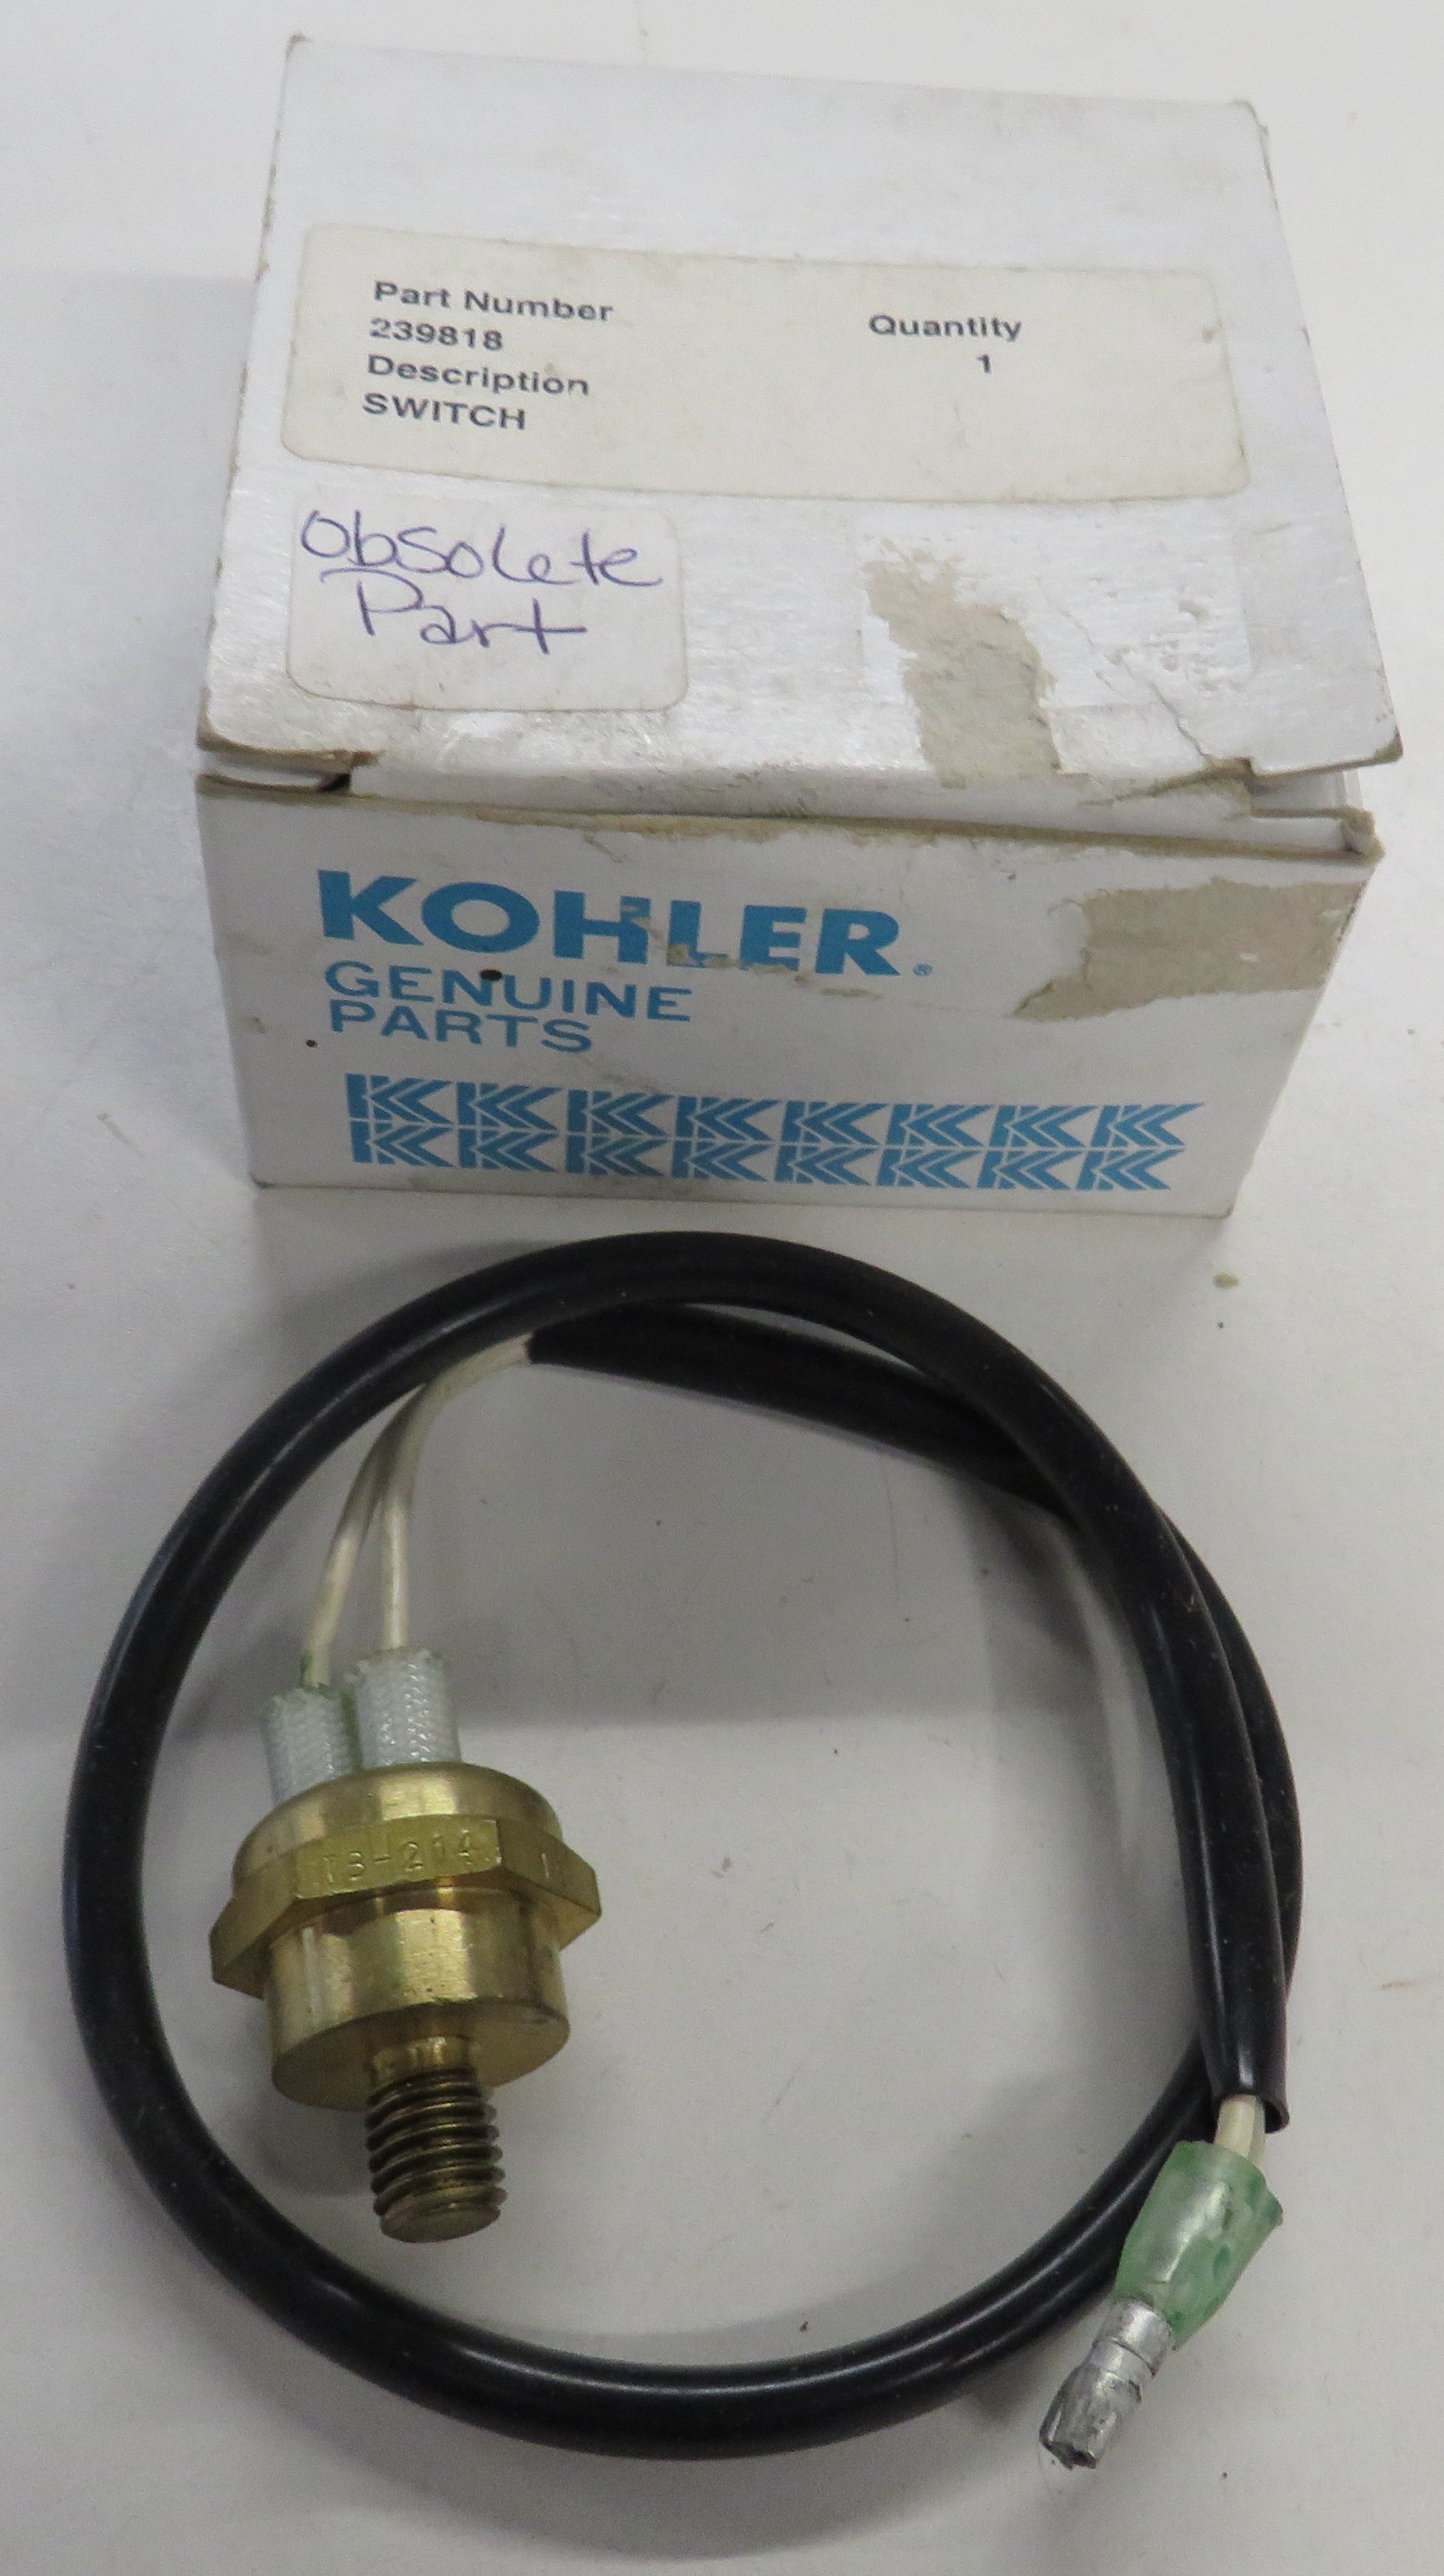 Kohler 239818 Switch OBSOLETE